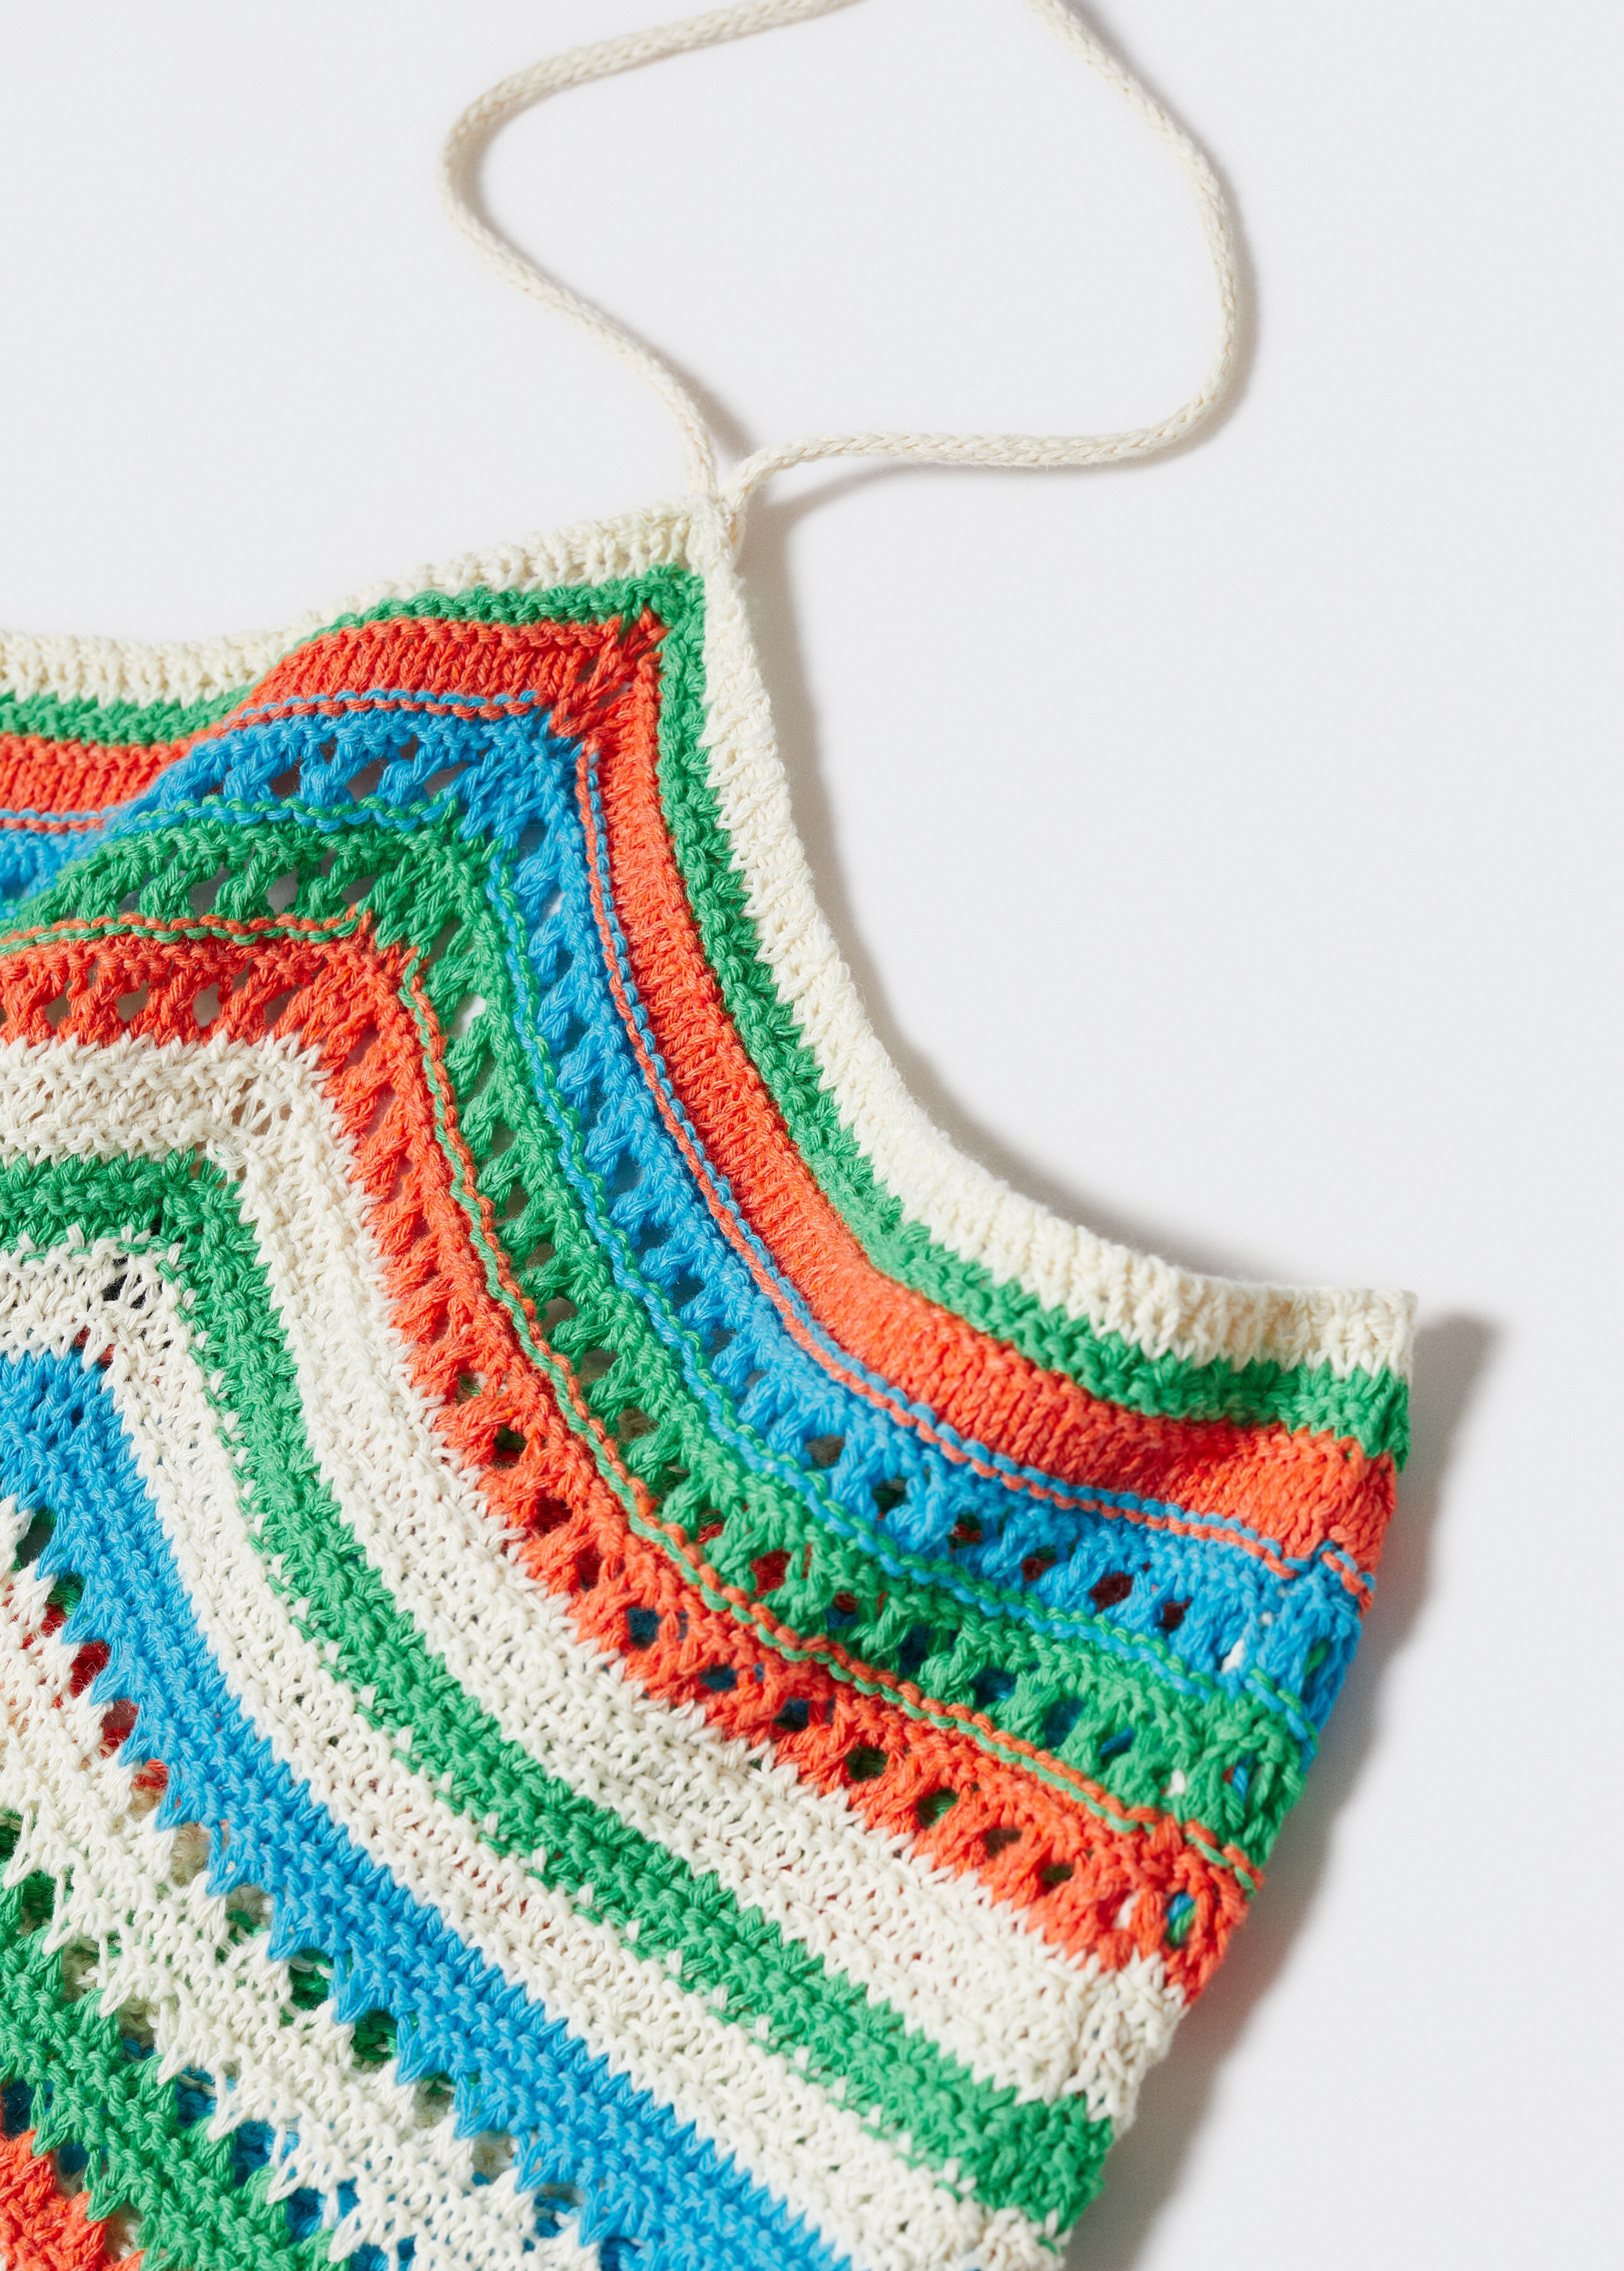 Halter-neck crochet dress - Details of the article 8